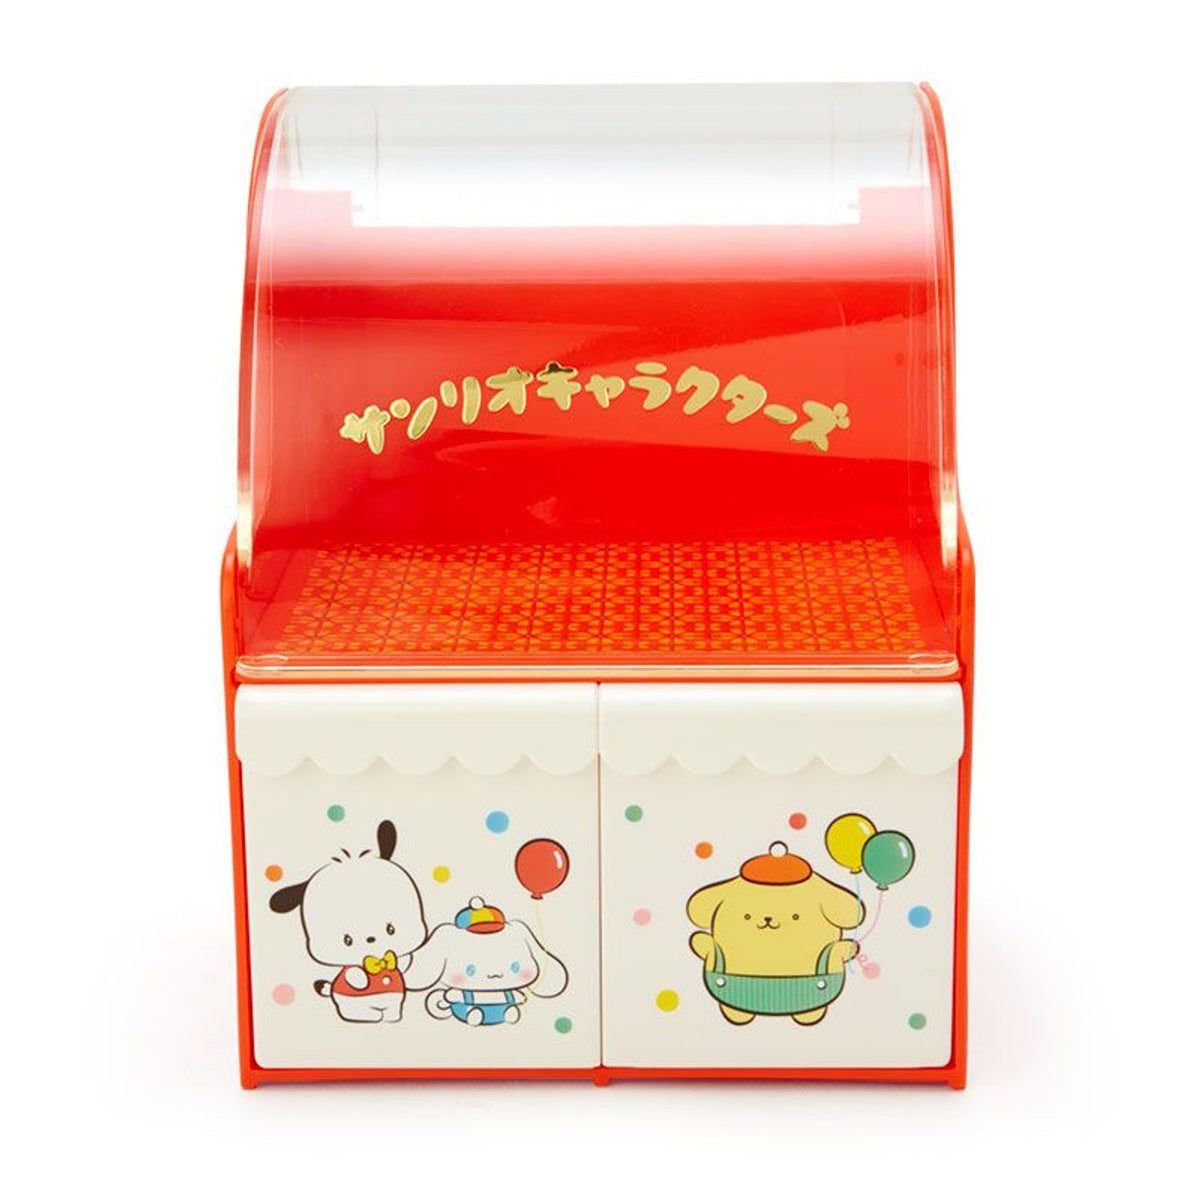 Sanrio Characters Mini Red Storage Chest (Retro Room Series) Home Goods Sanrio Original   